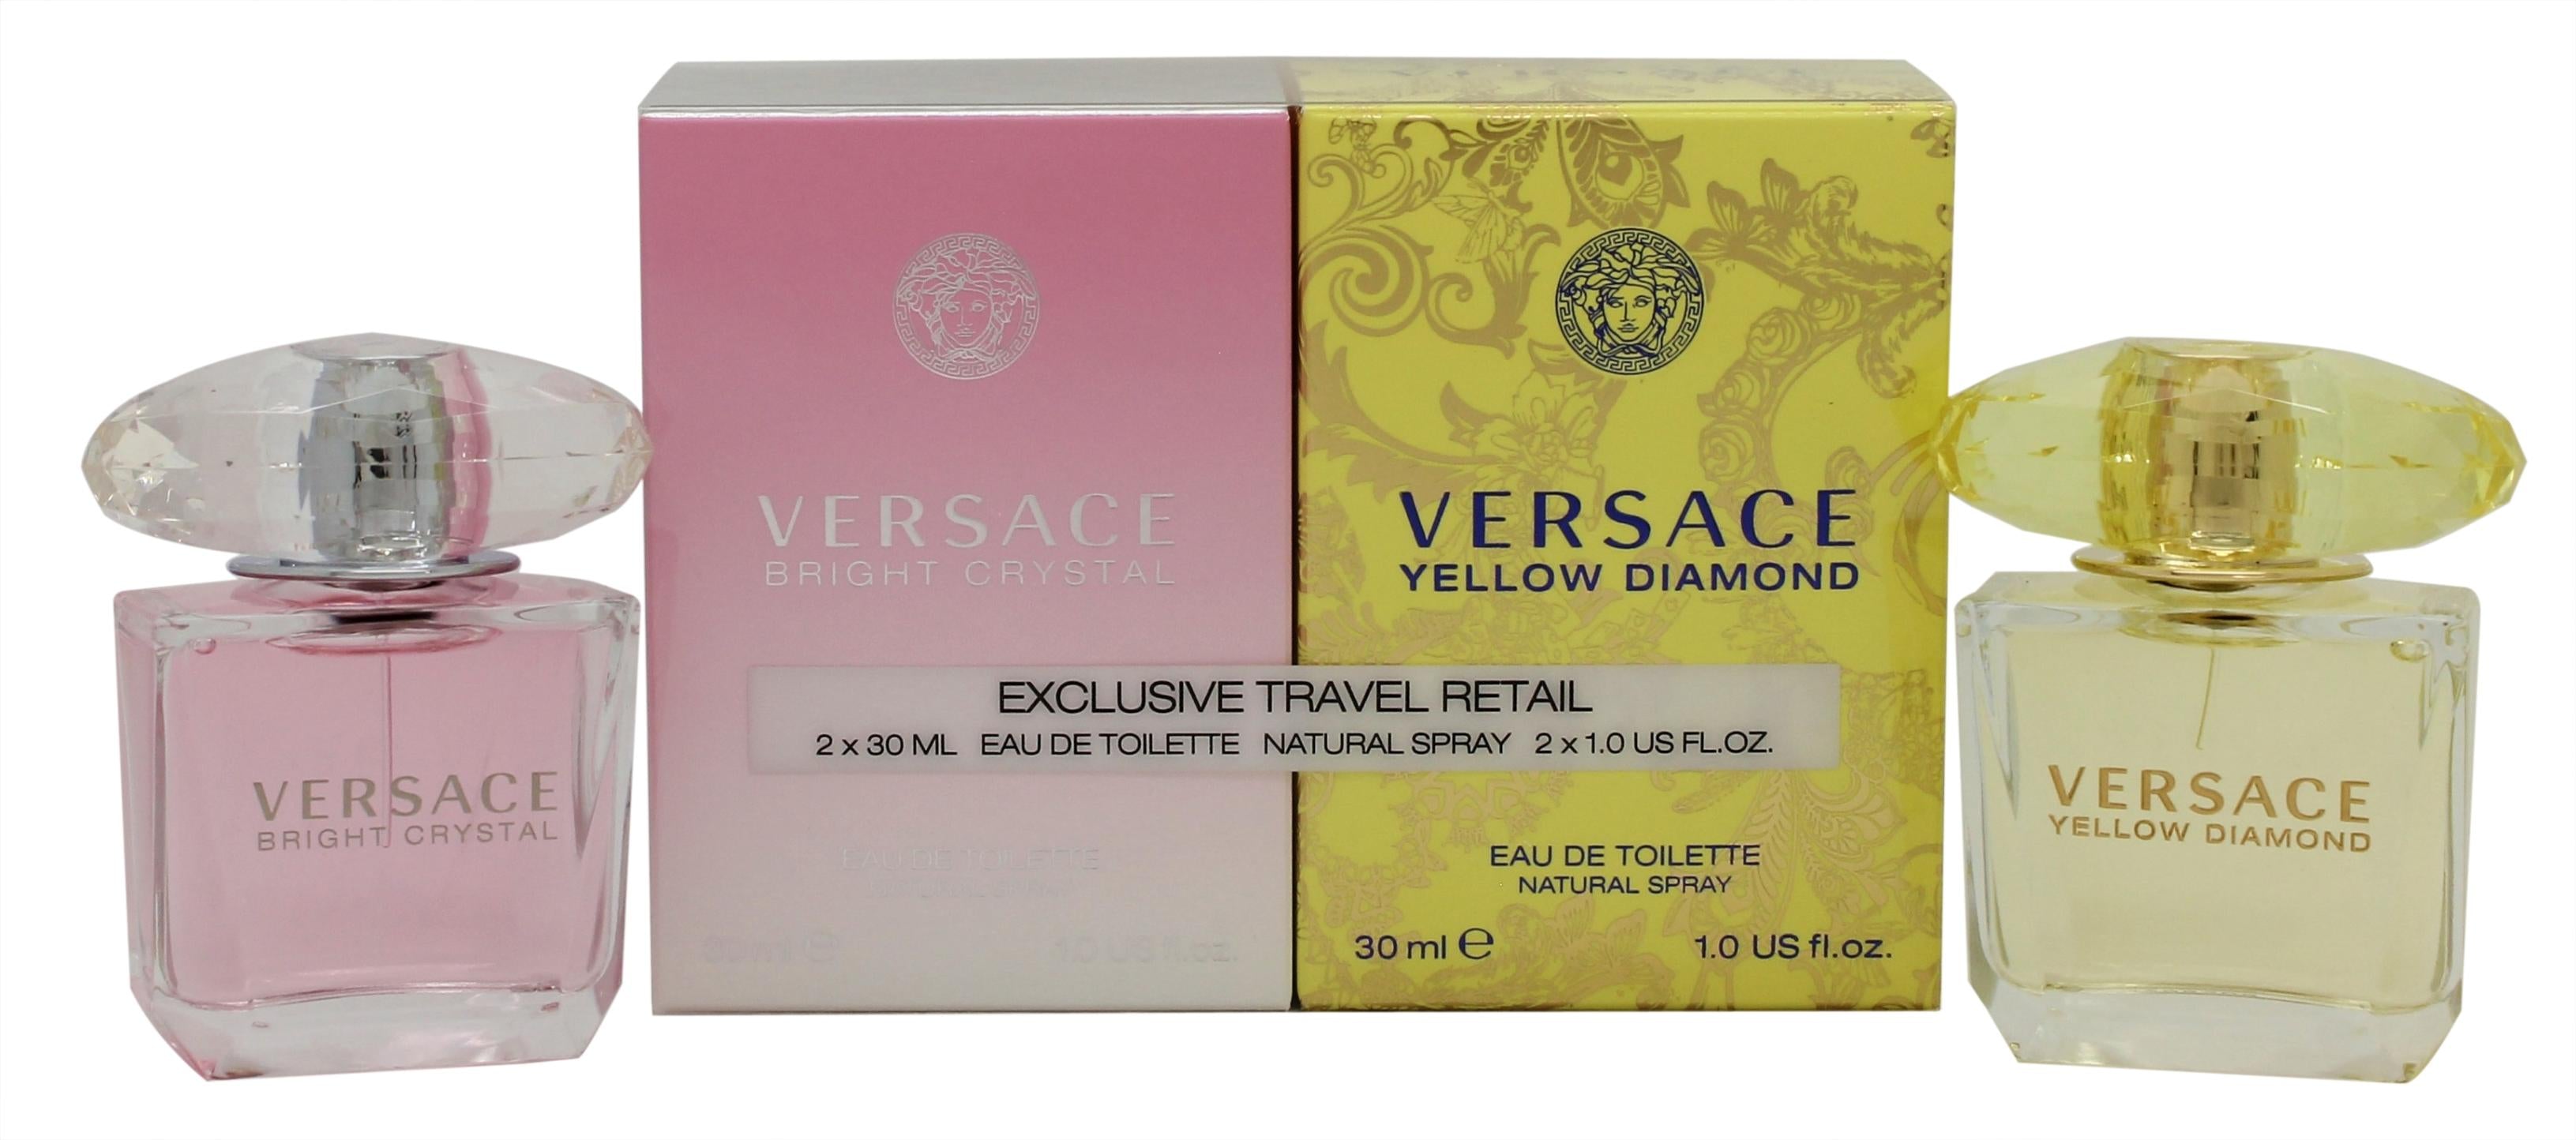 View Versace Presentset 30ml Yellow Diamond EDT 30ml Bright Crystal EDT information